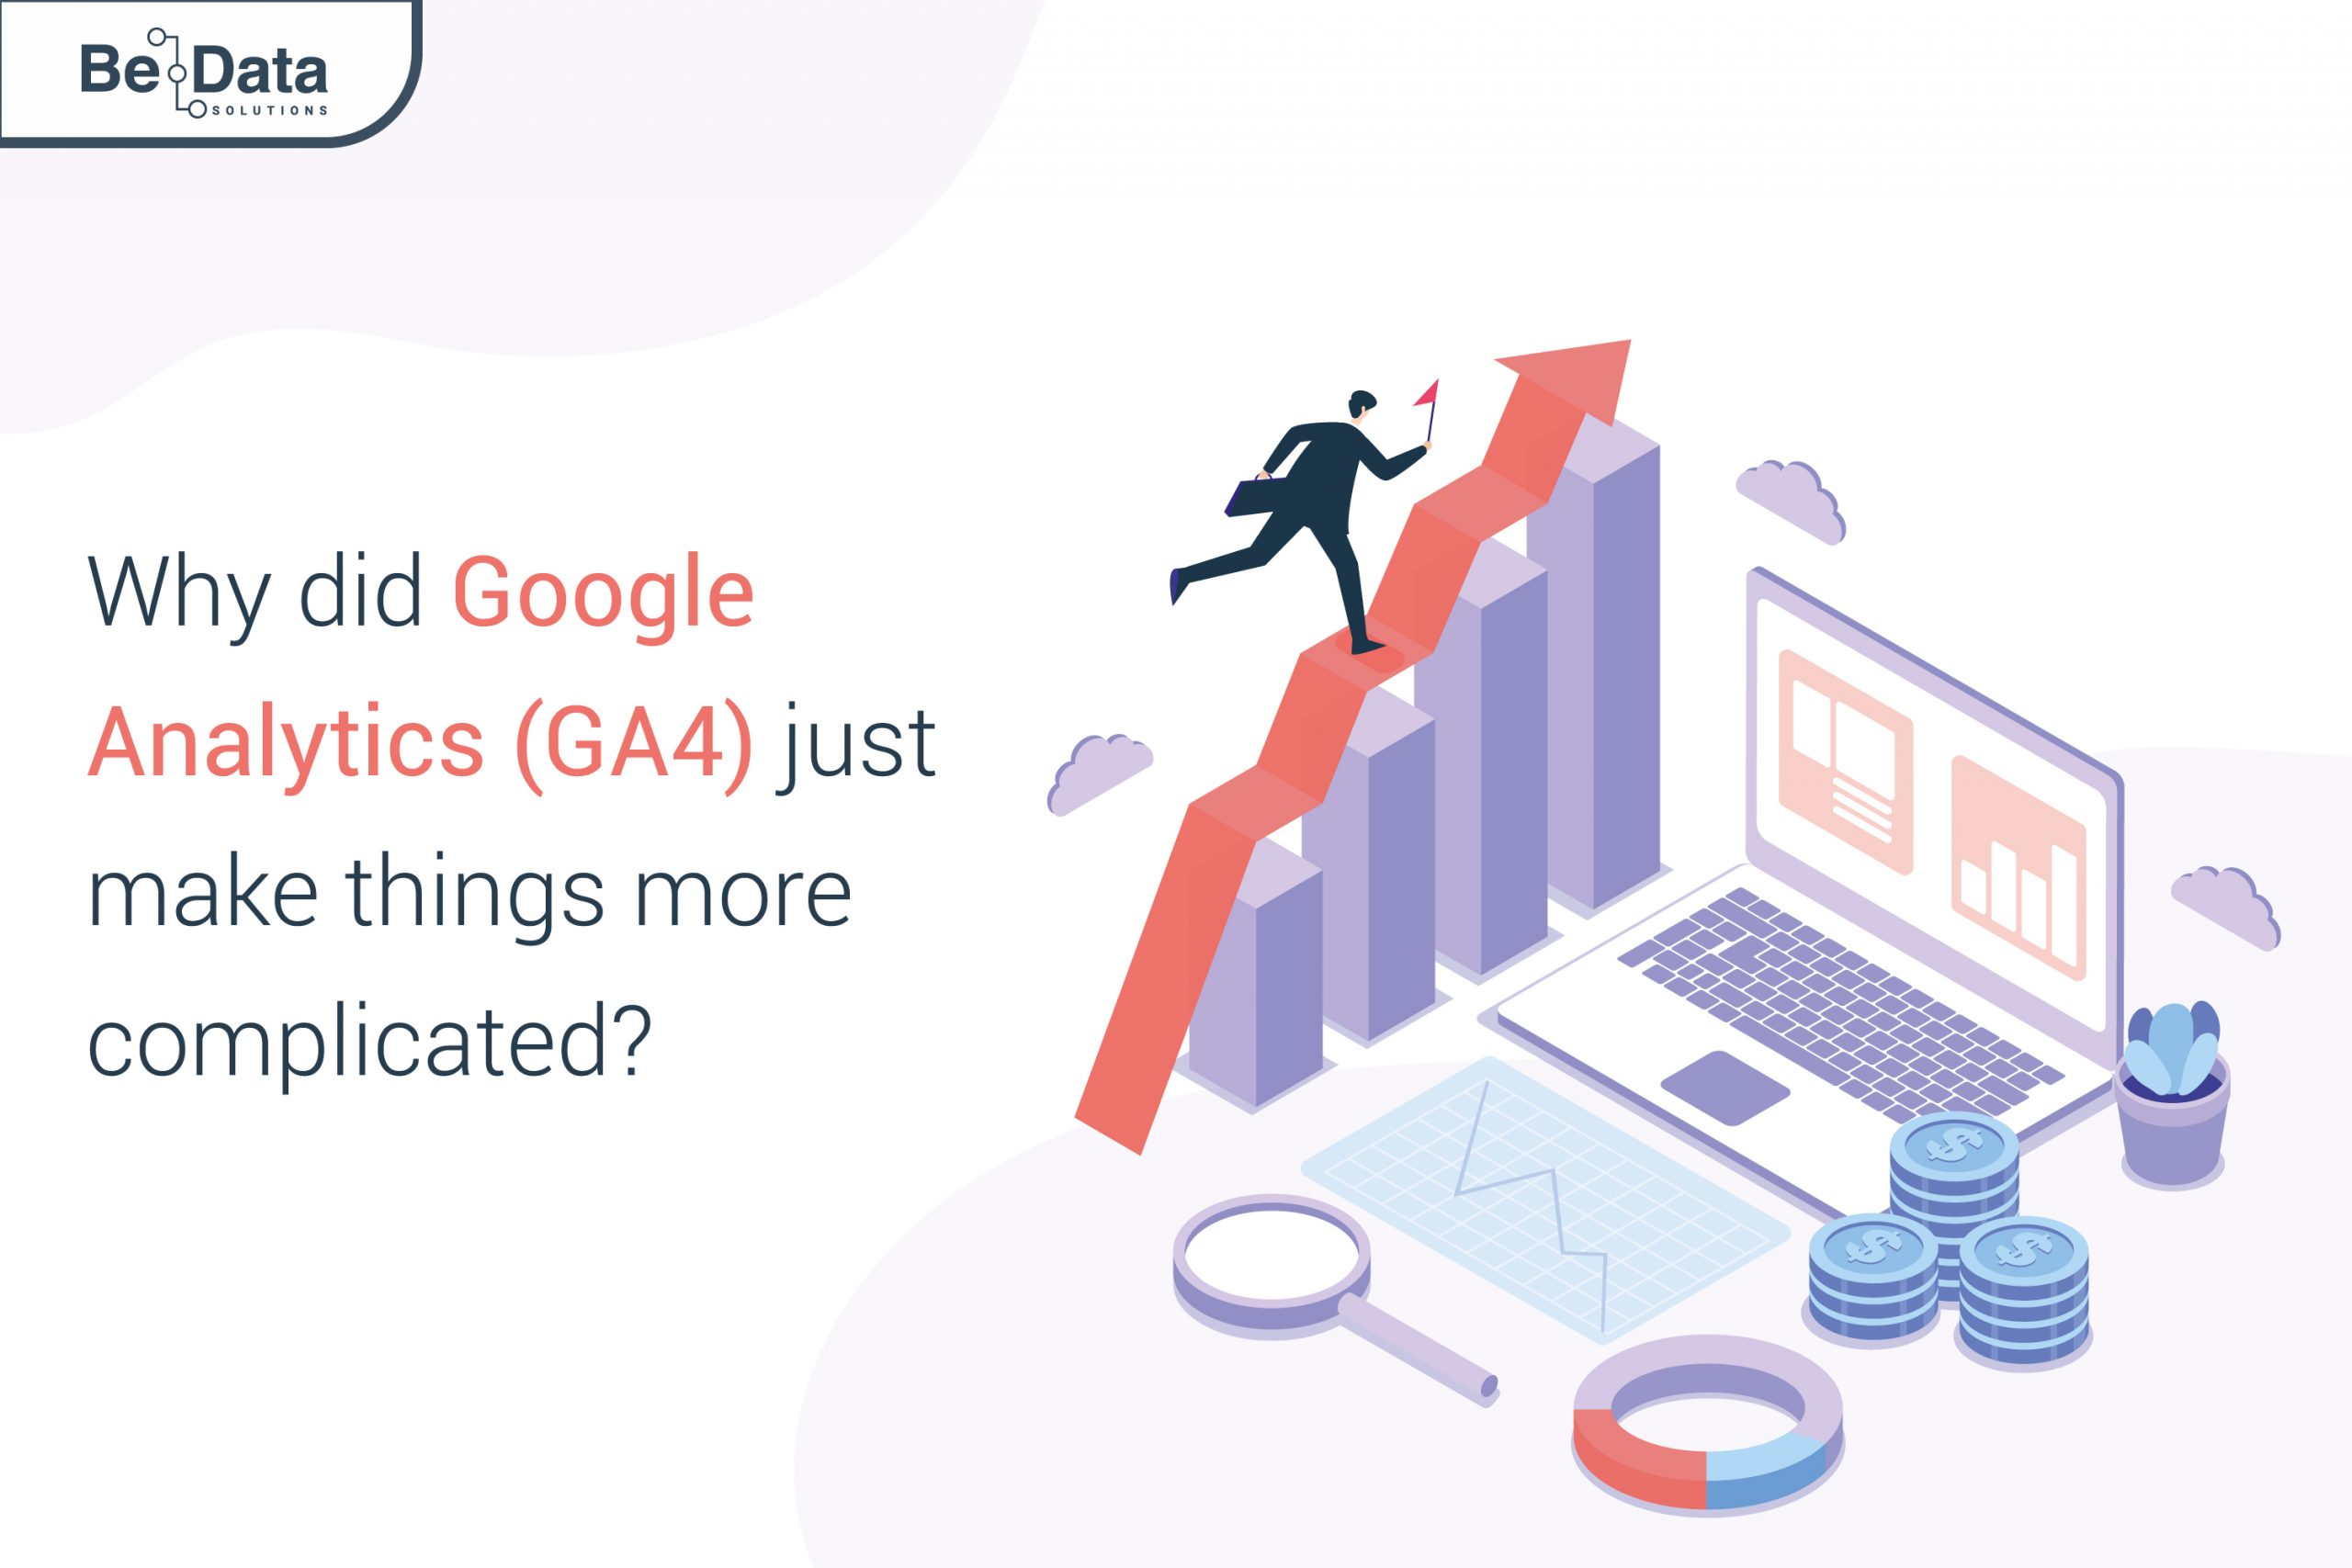 Why did Google make GA4 complicated?